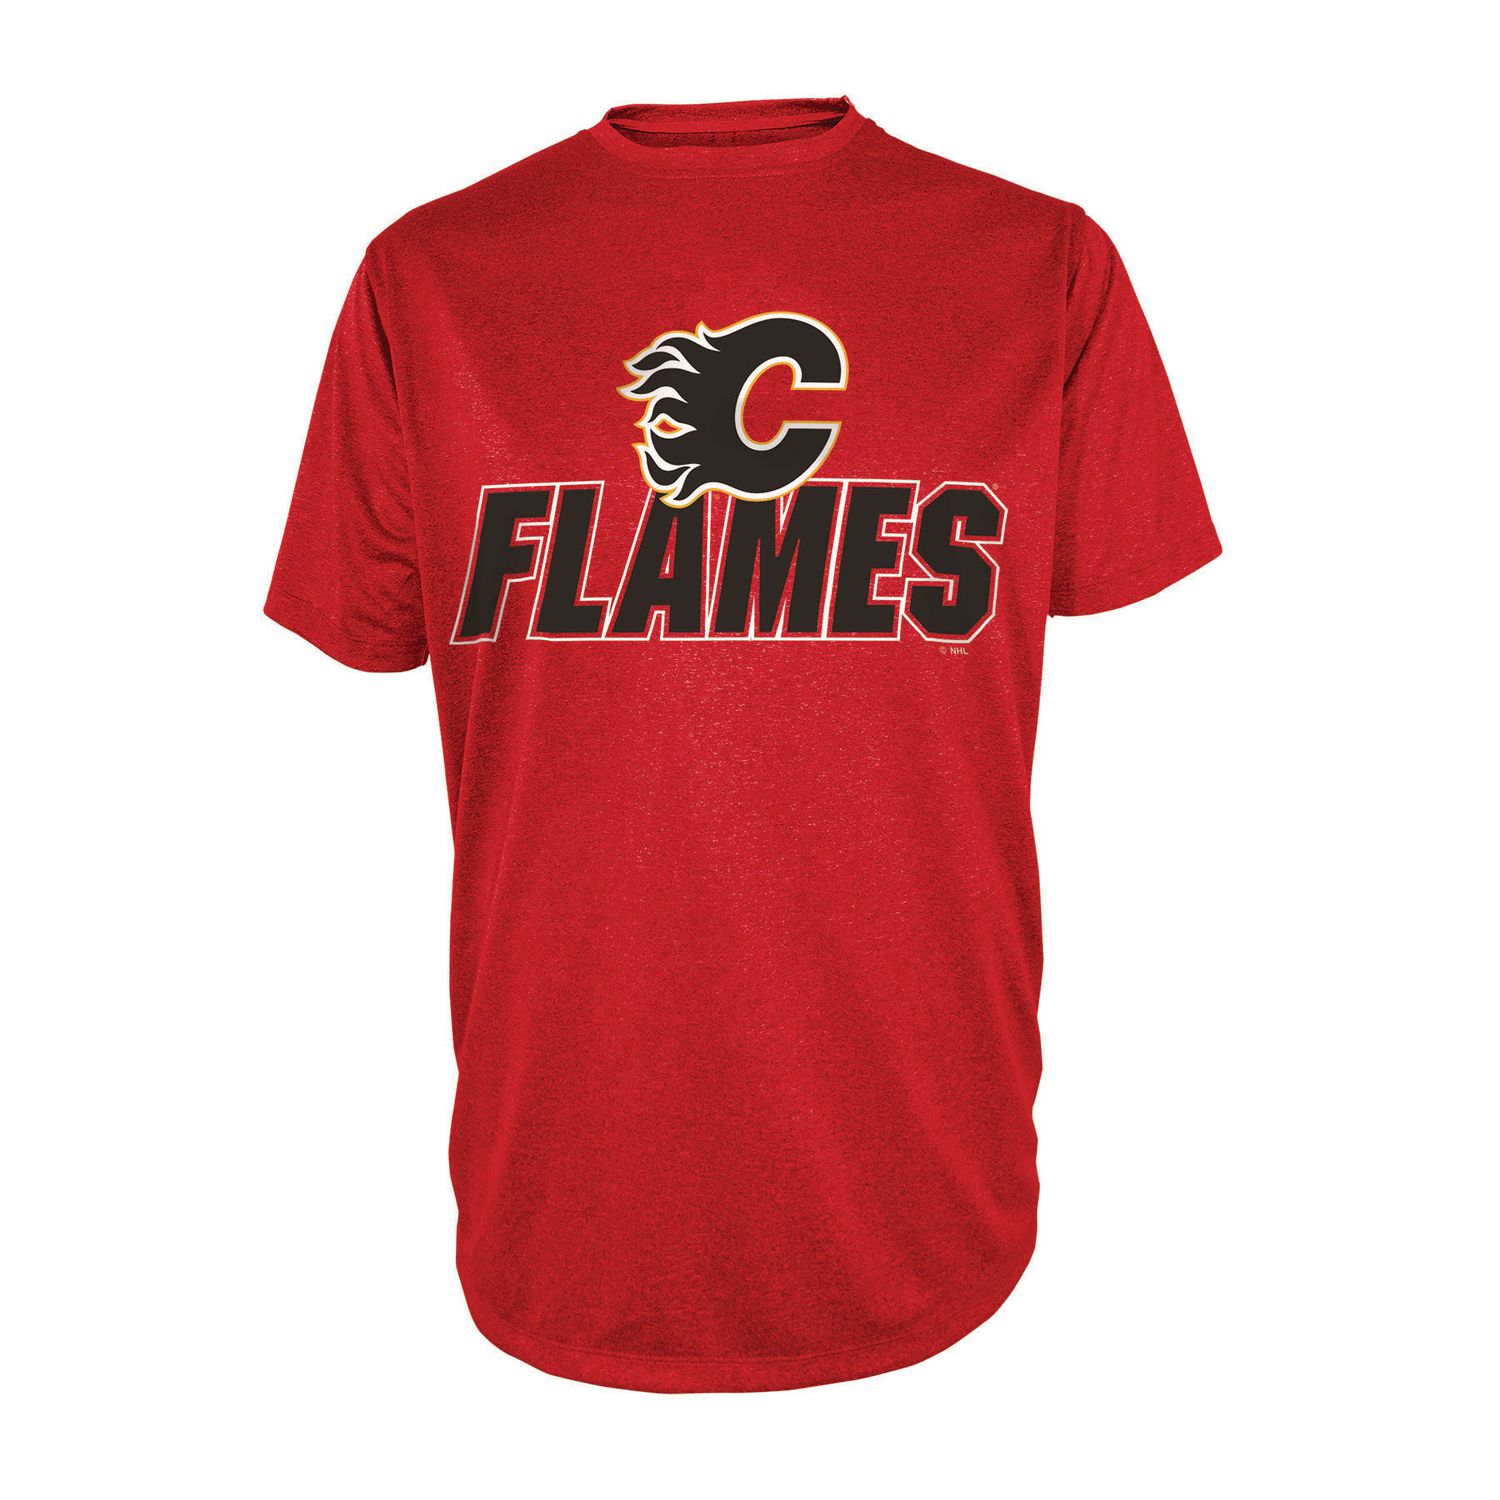 Calgary flames t shirt